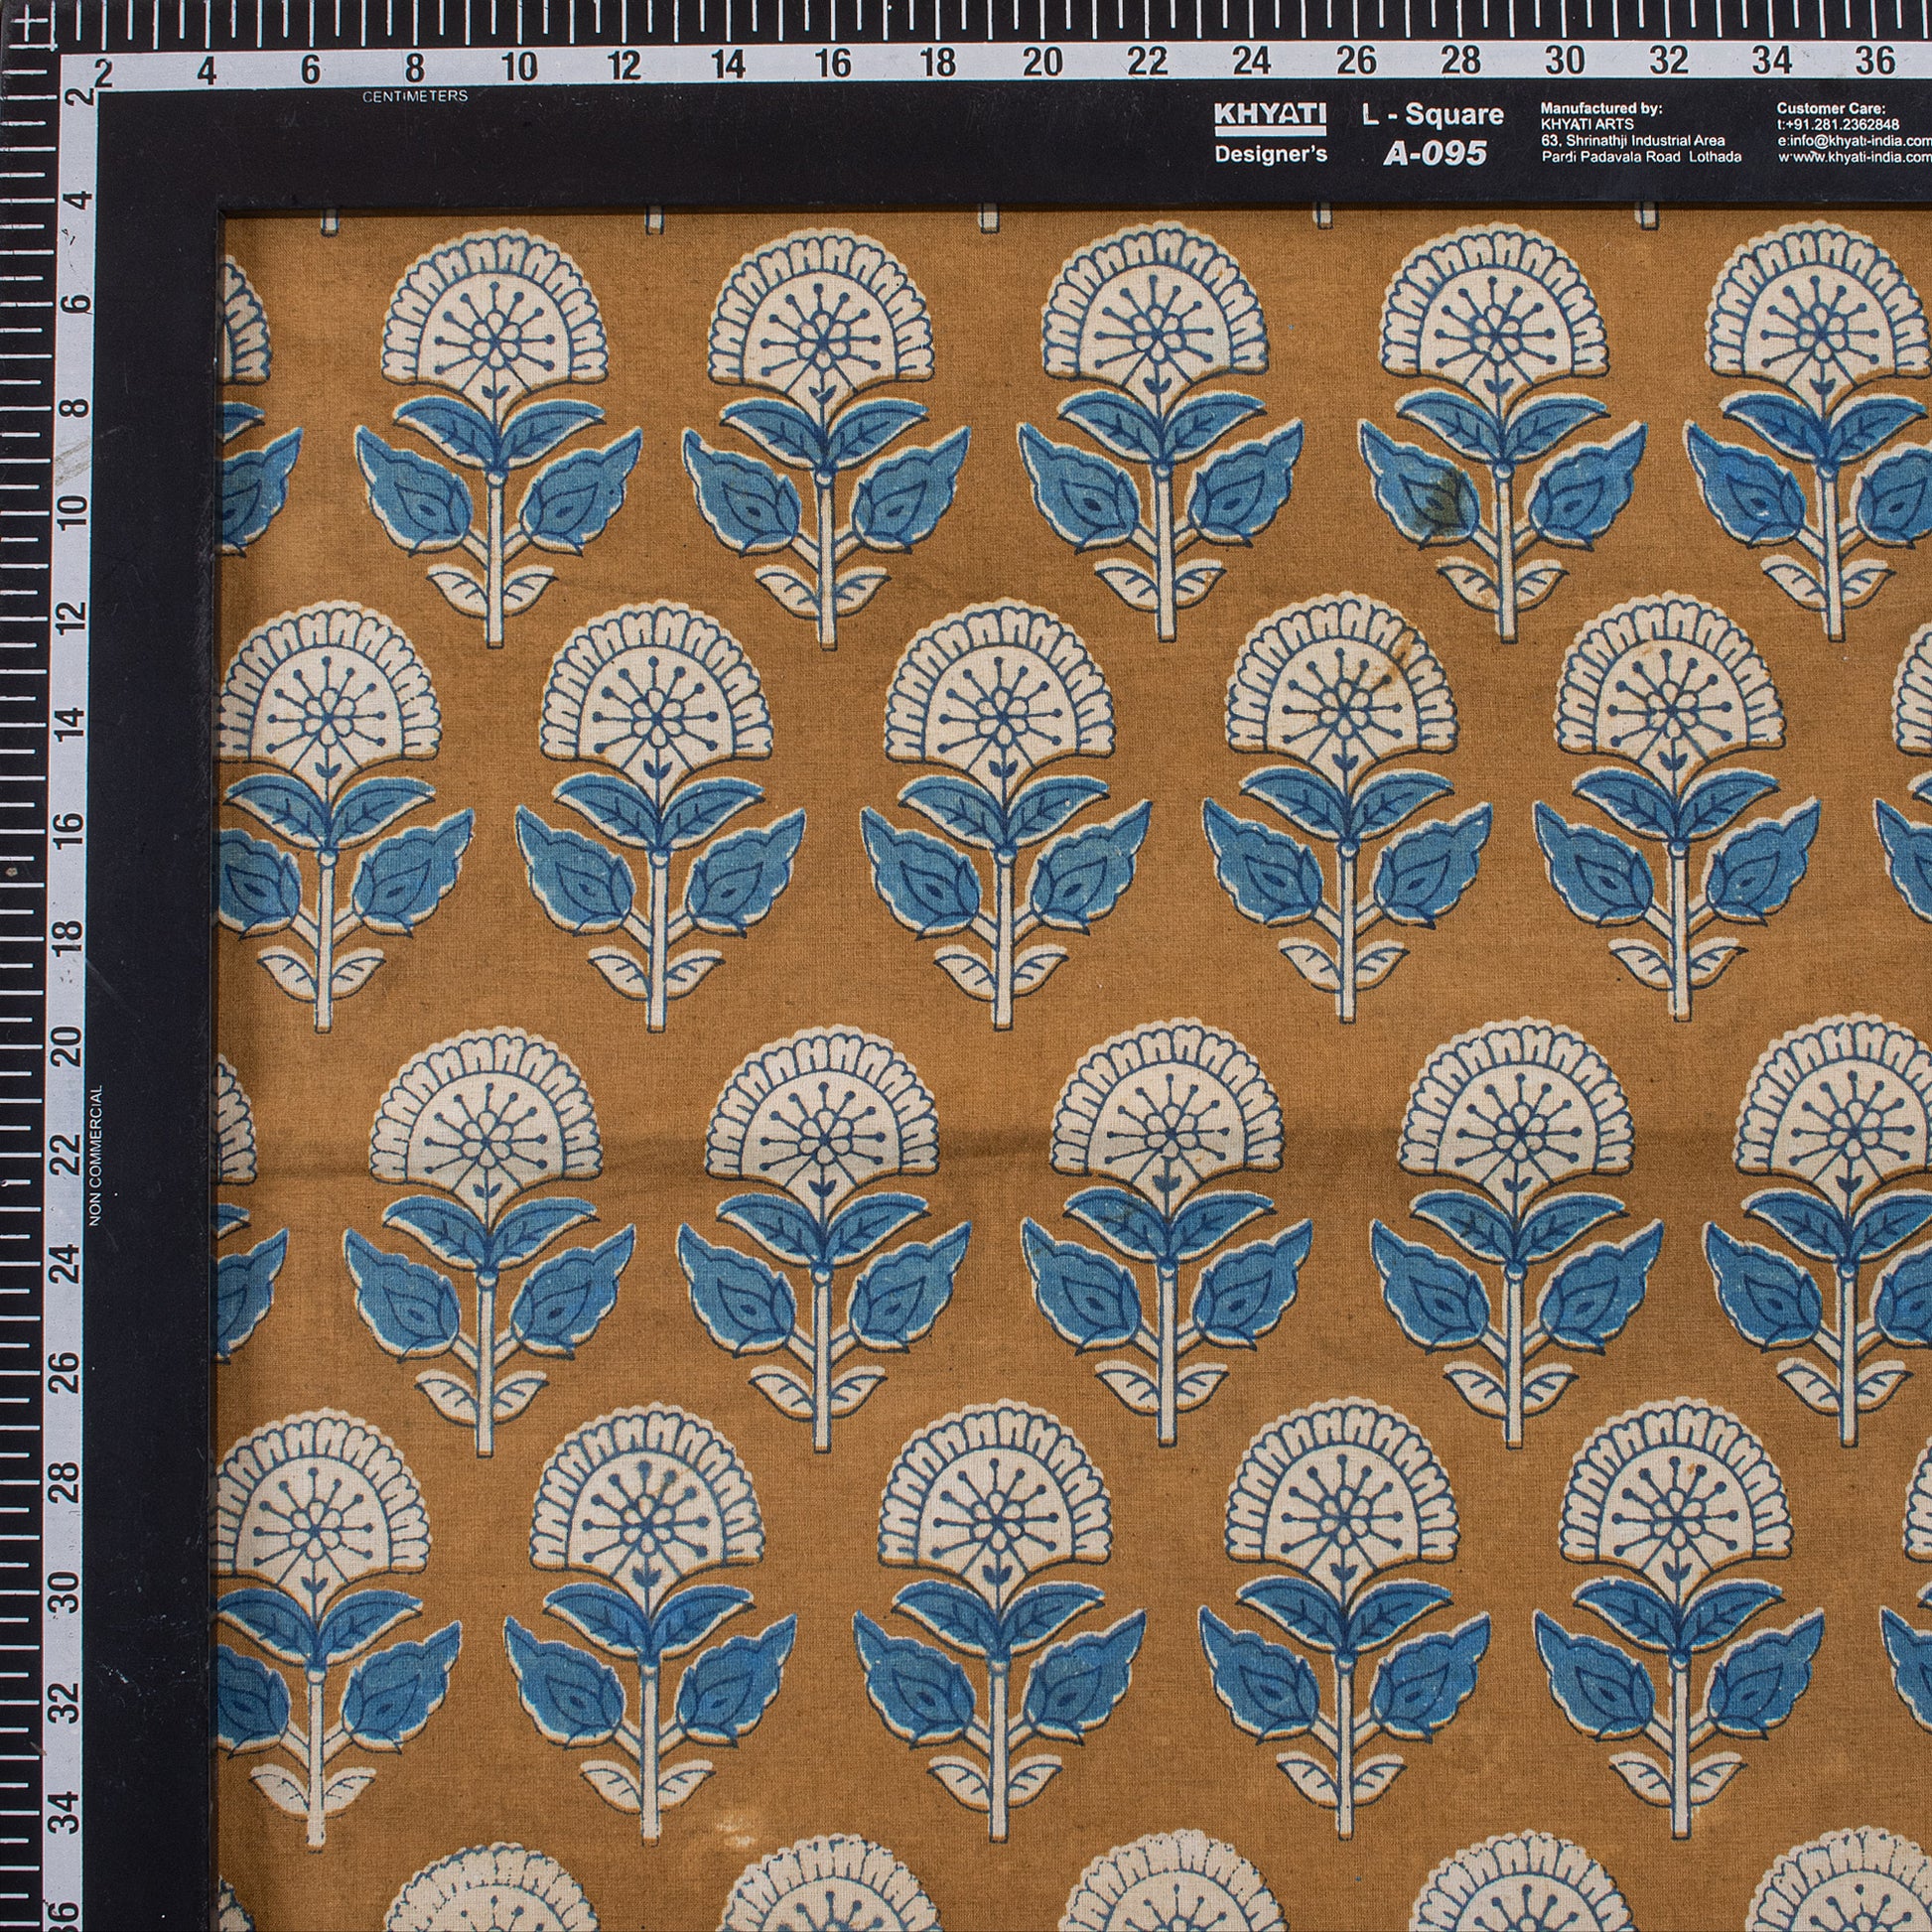 Dabu Floral Print Soft Cotton Fabric